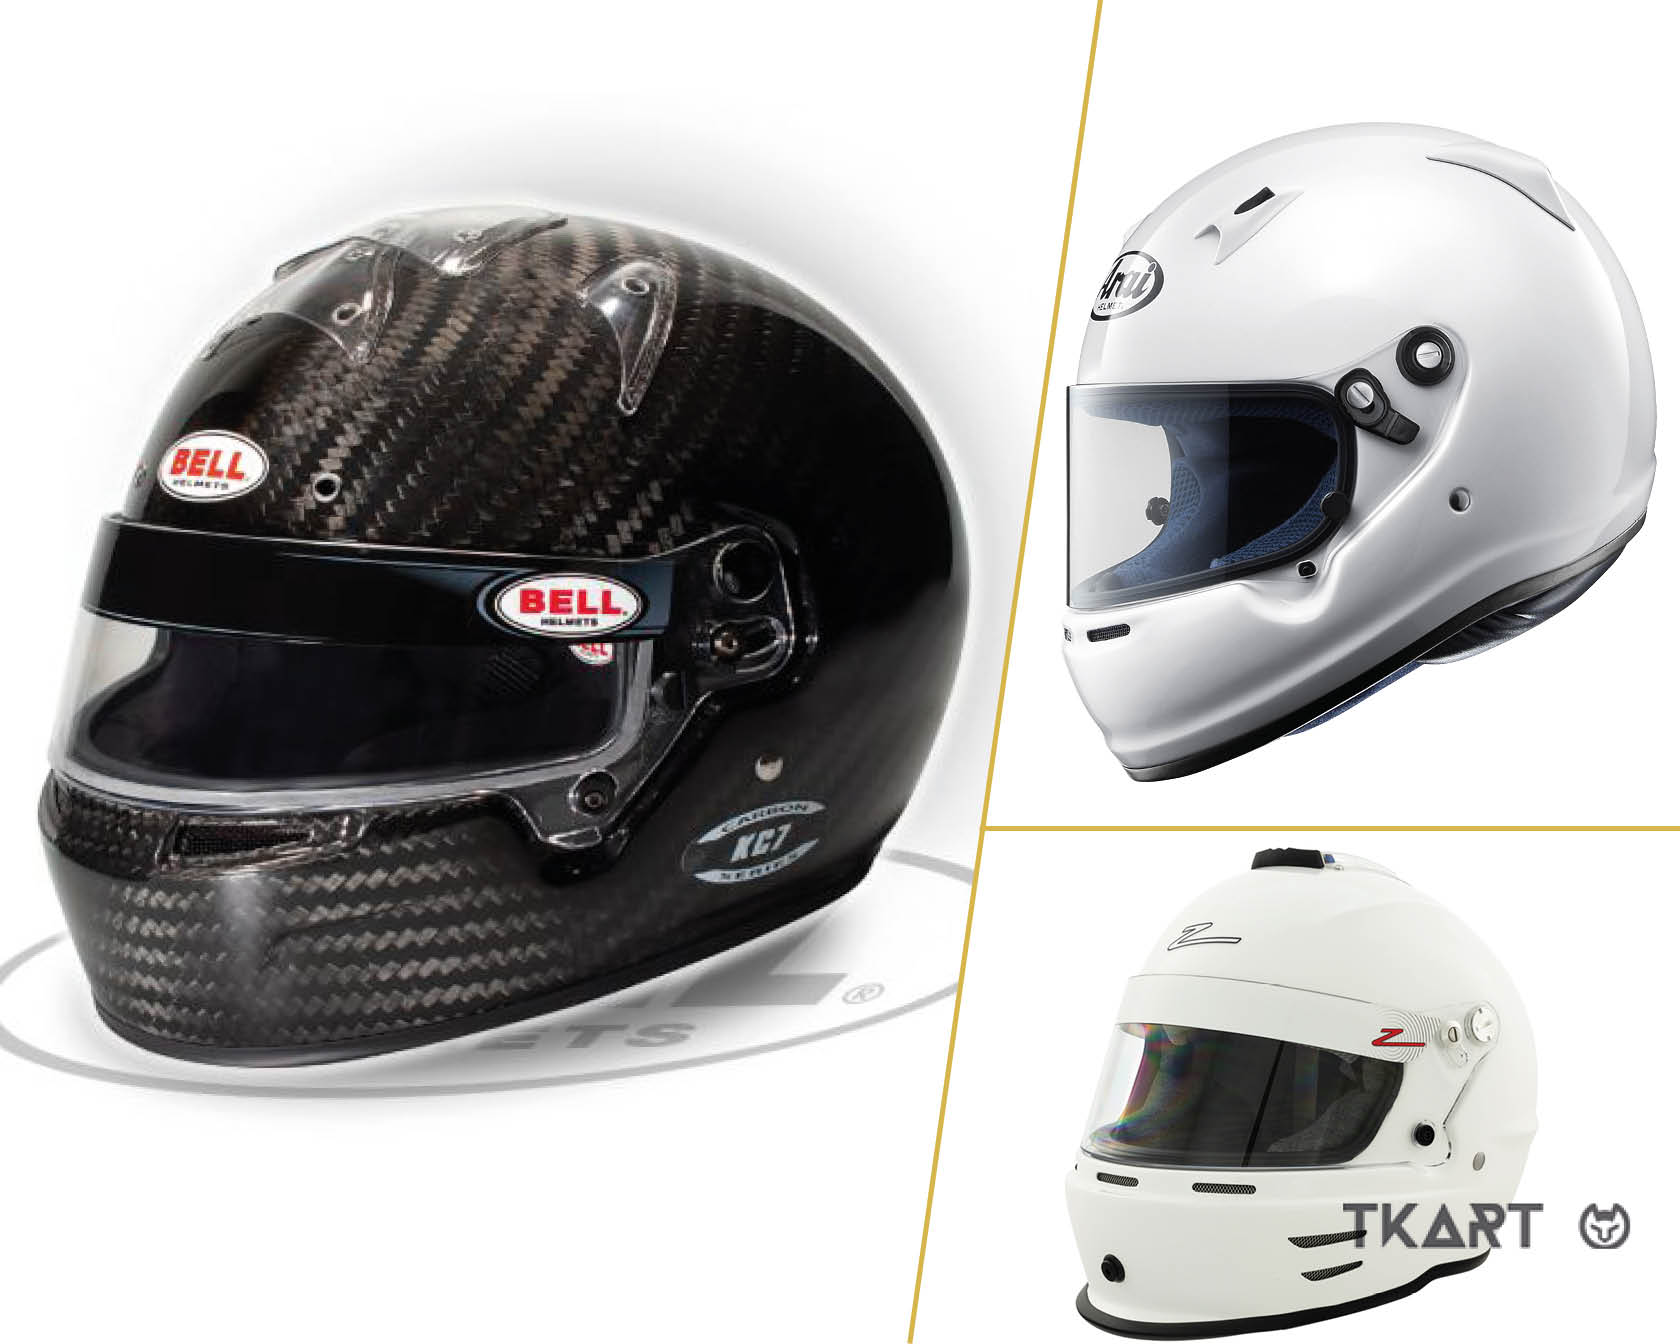 Kart helmets: 60 years of history  TKART - News, tips, tech about karting